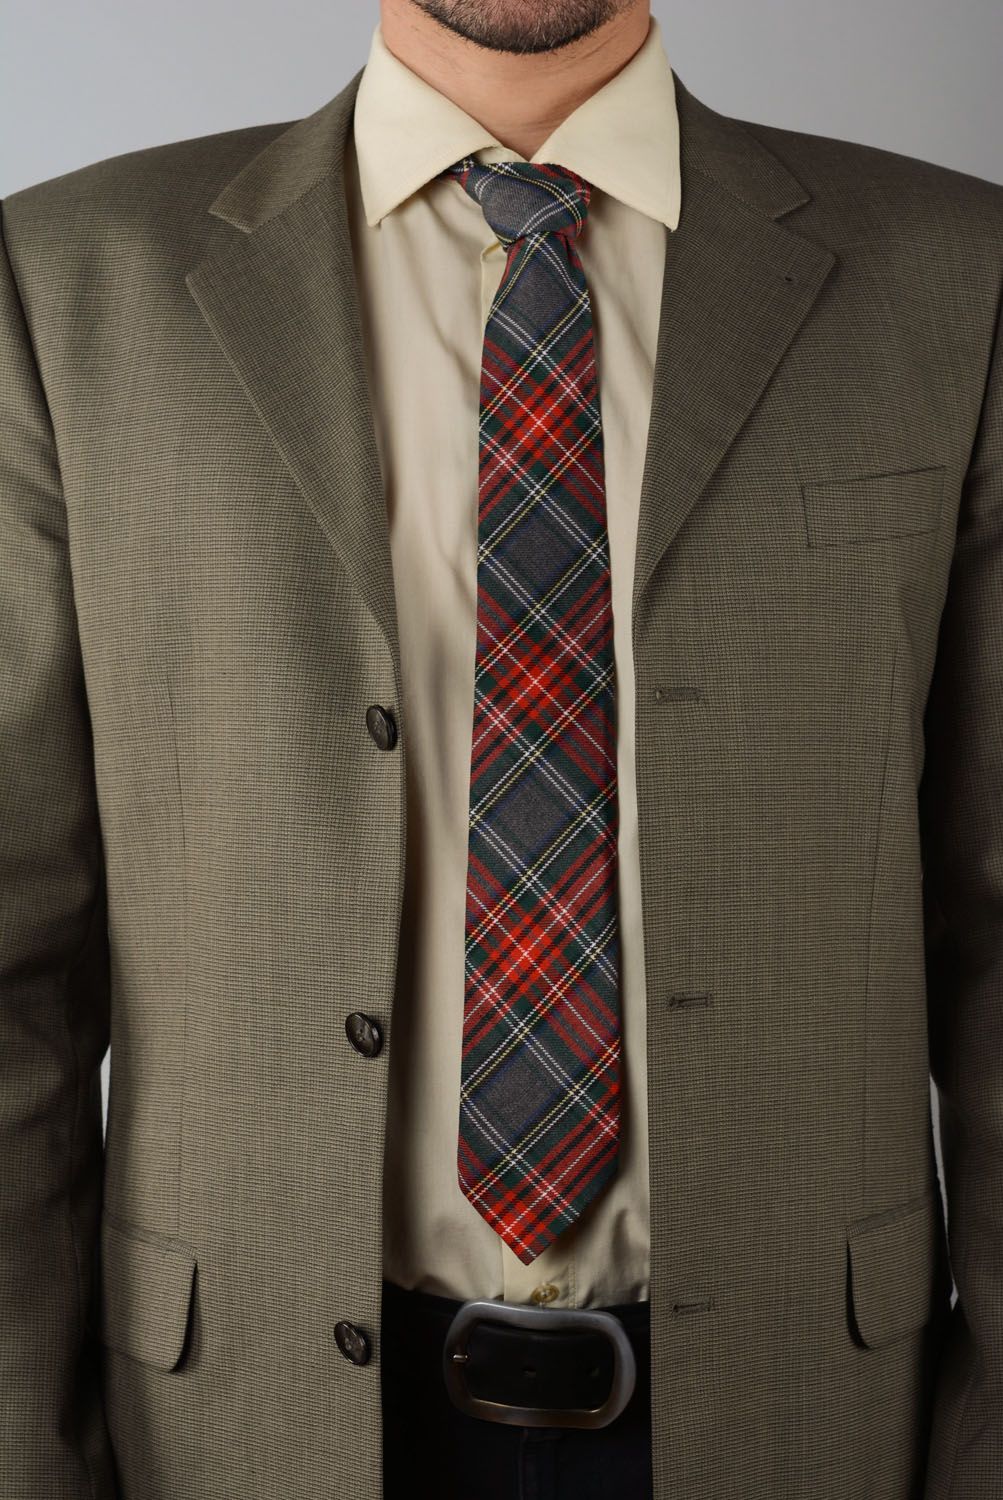 Checkered tie photo 1